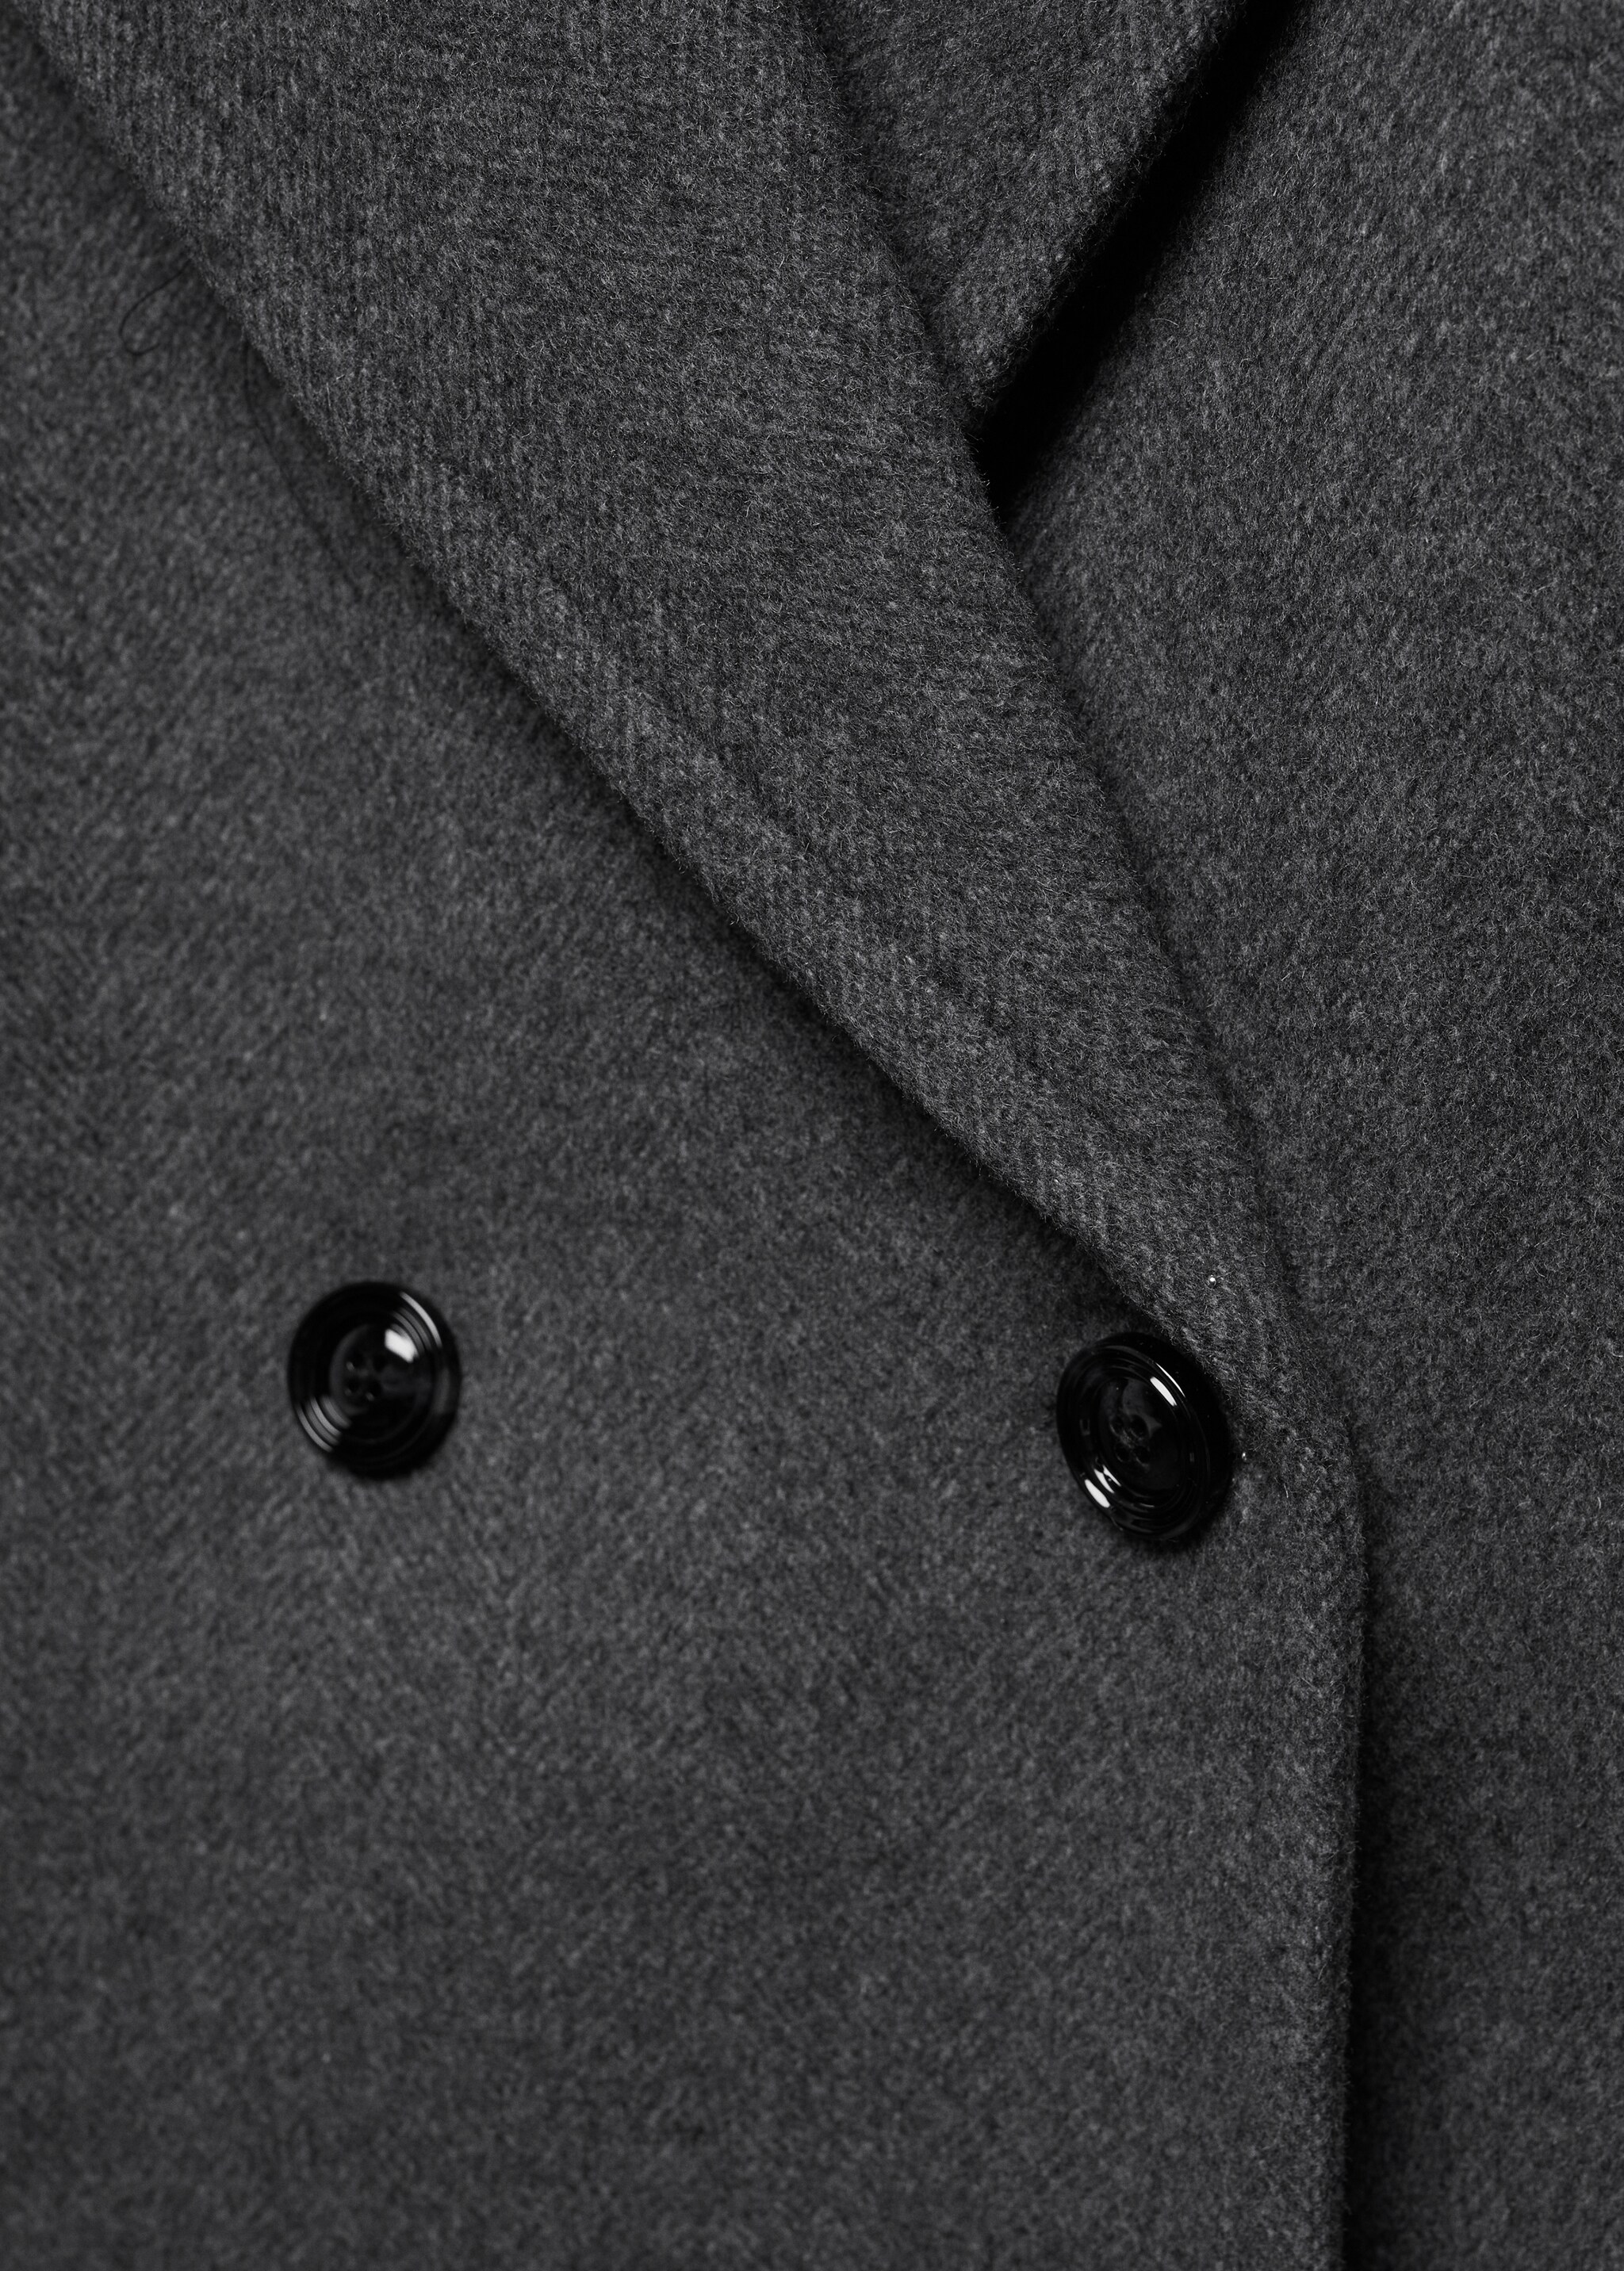 Lapels wool coat - Details of the article 8